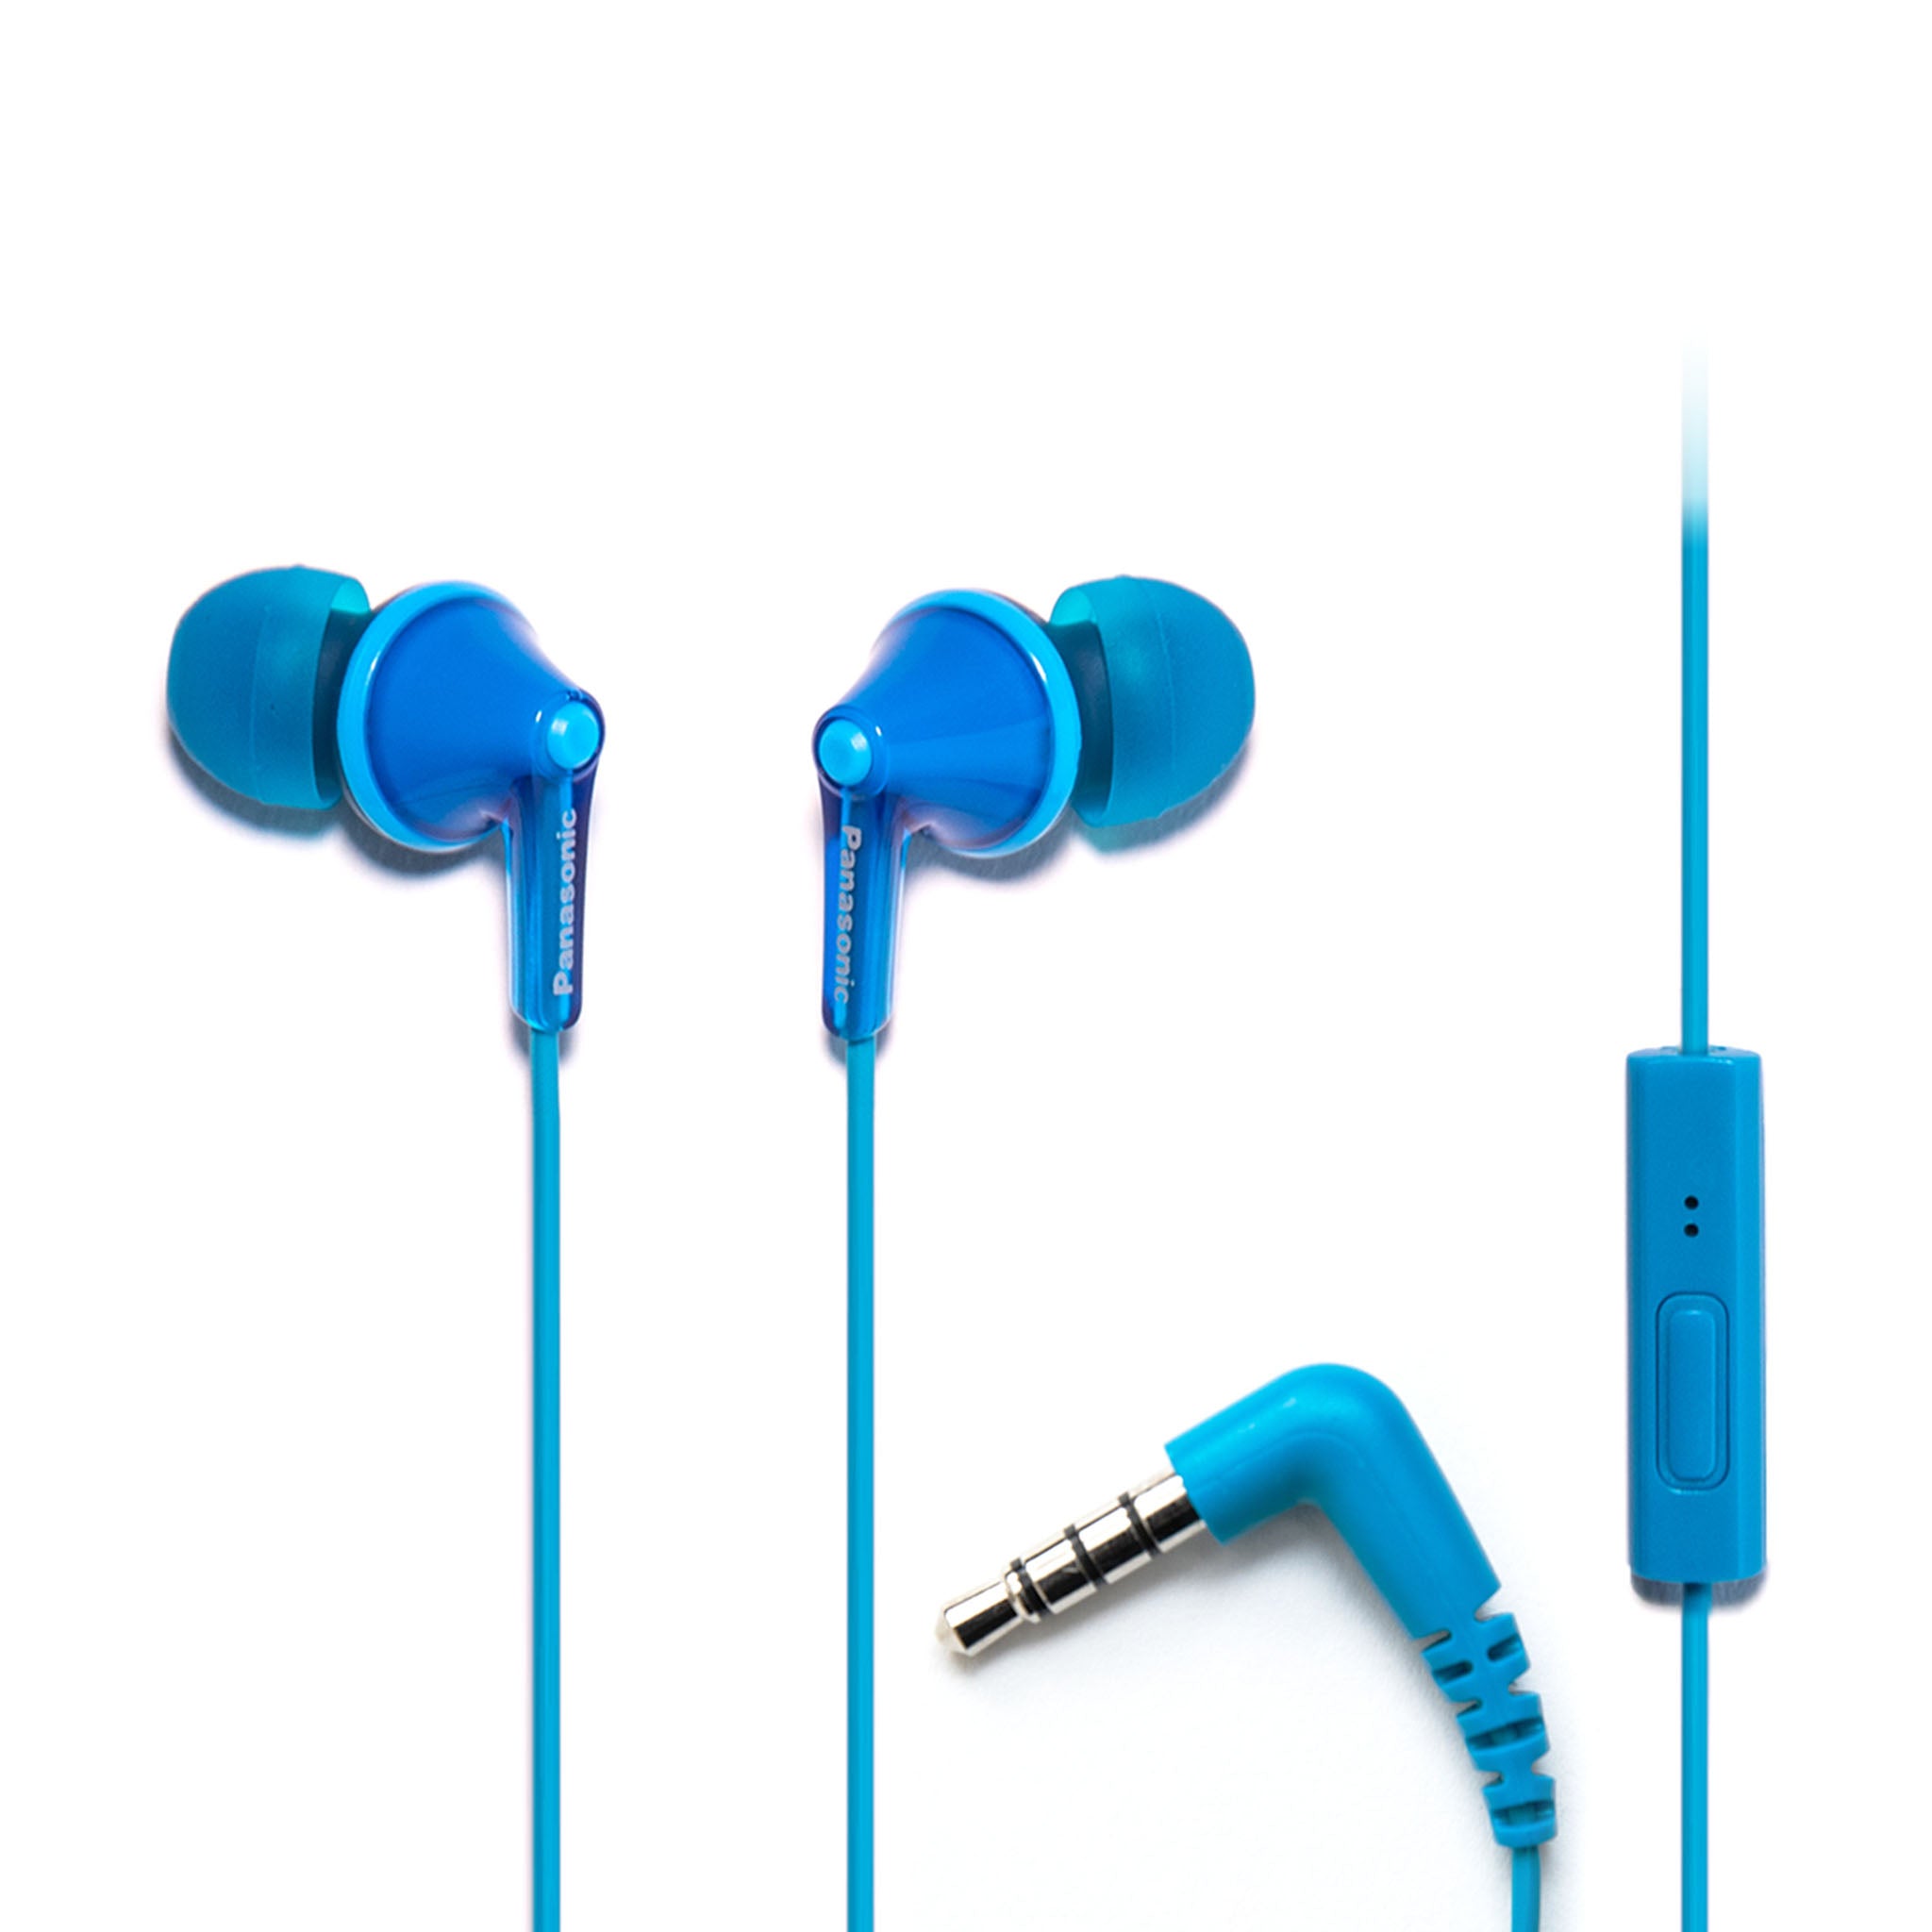 Panasonic On-Ear Headphones with XBS - RP-HT21